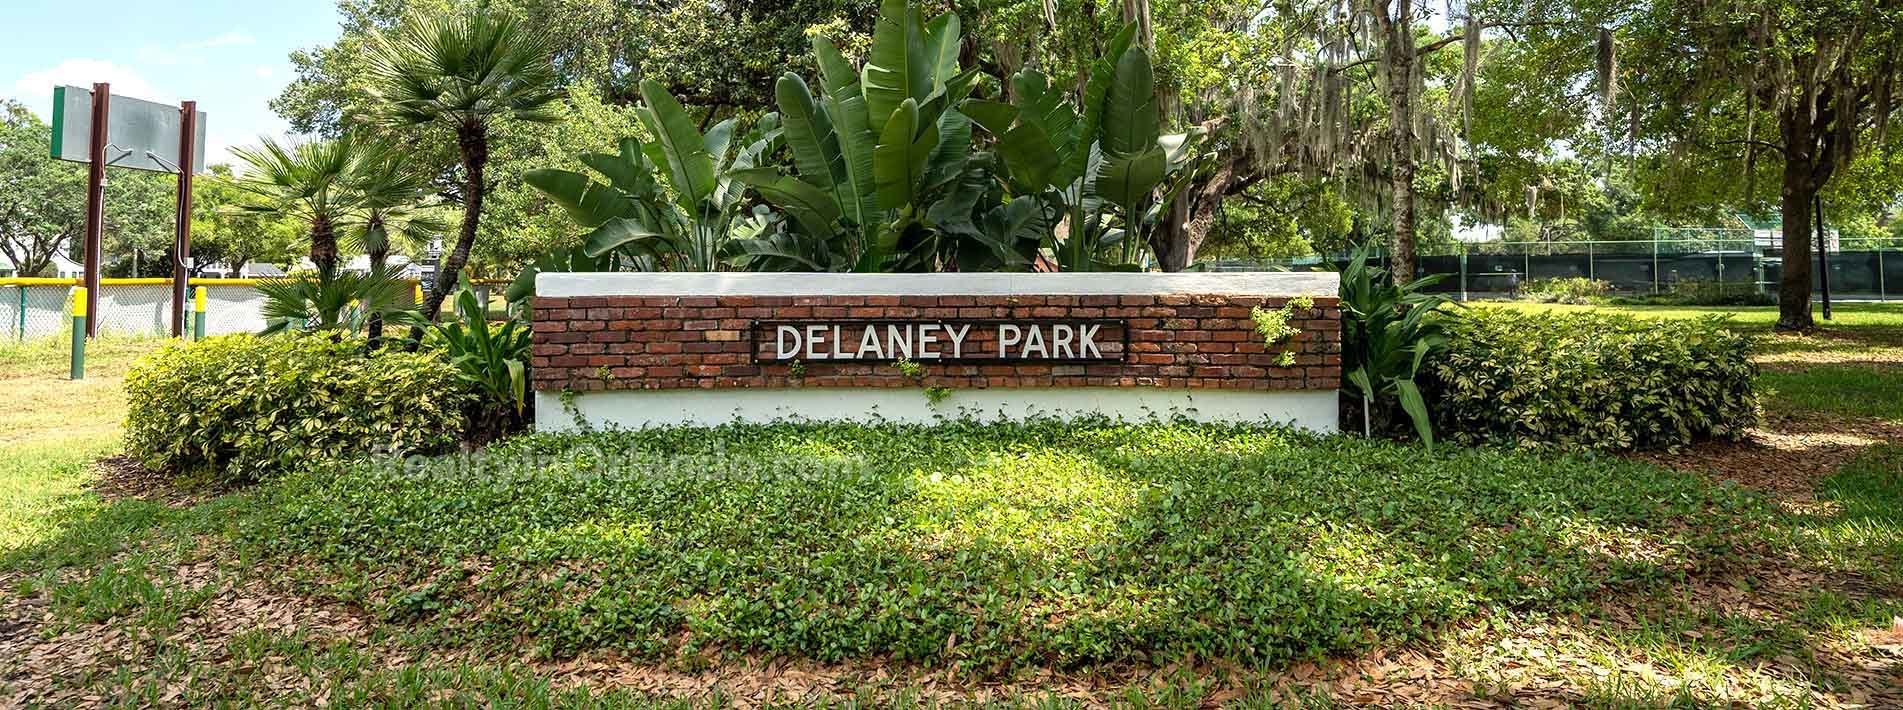 Delaney Park Downtown Orlando Real Estate